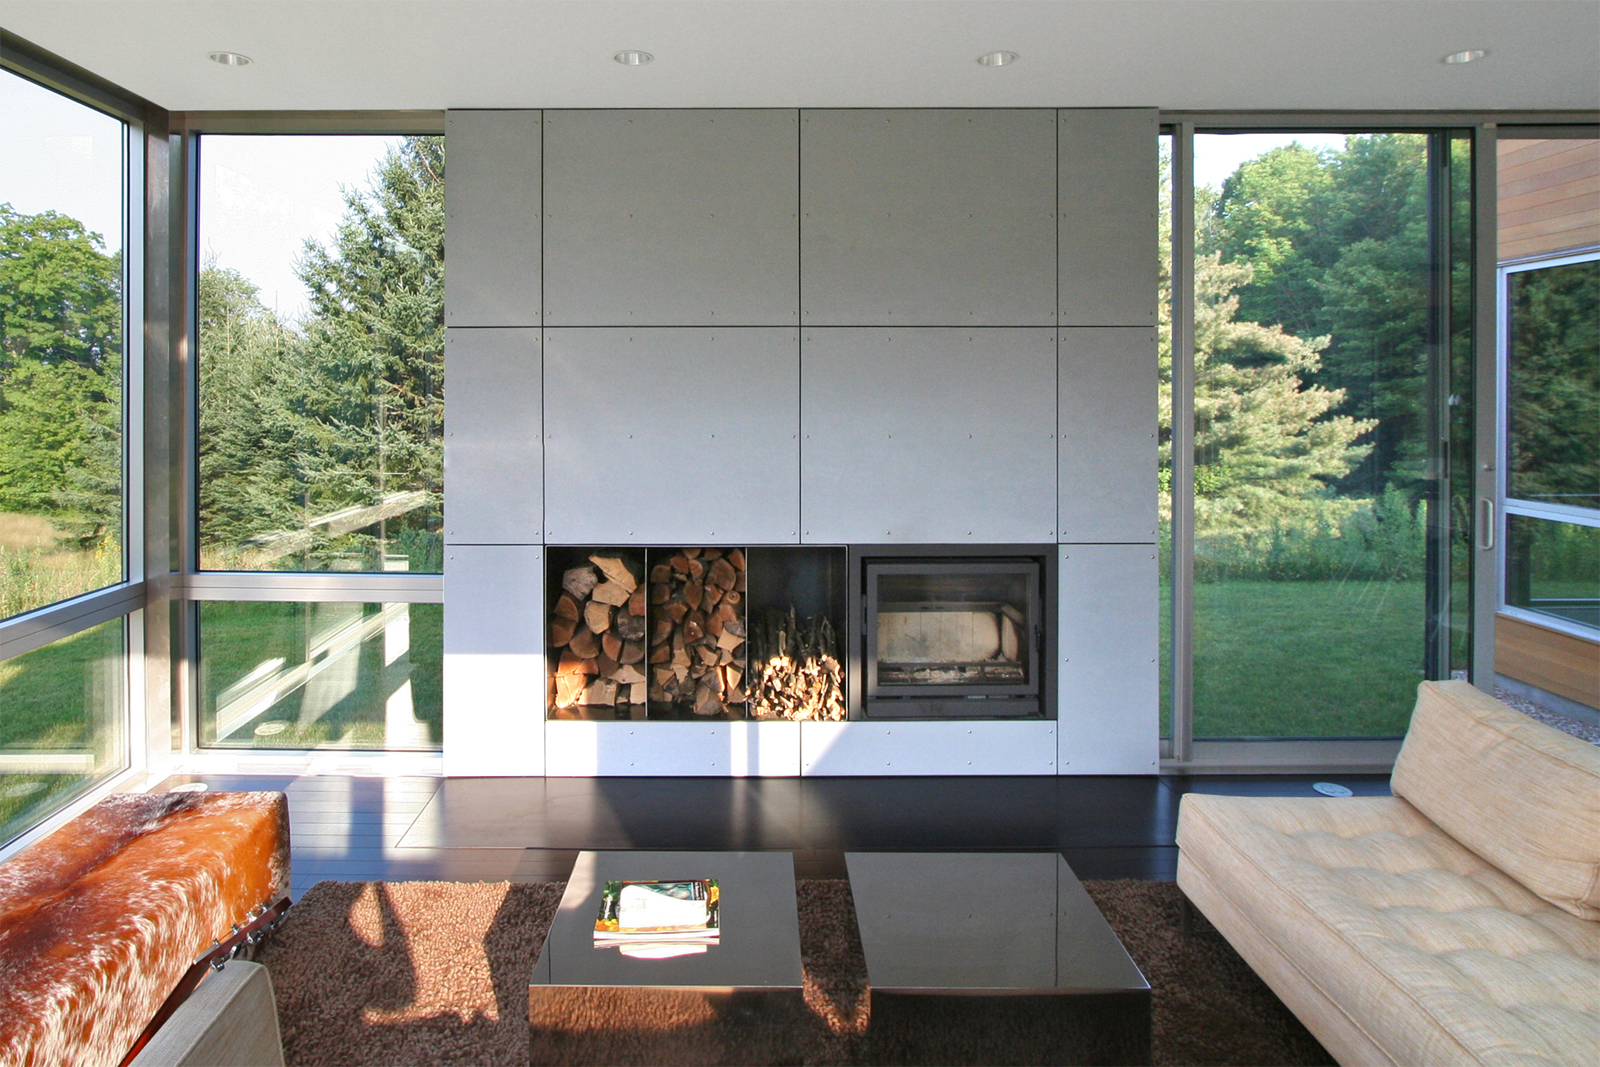 06-res4-resolution-4-architecture-modern-modular-home-prefab-sunset-ridge-house-interior-living-room.jpg